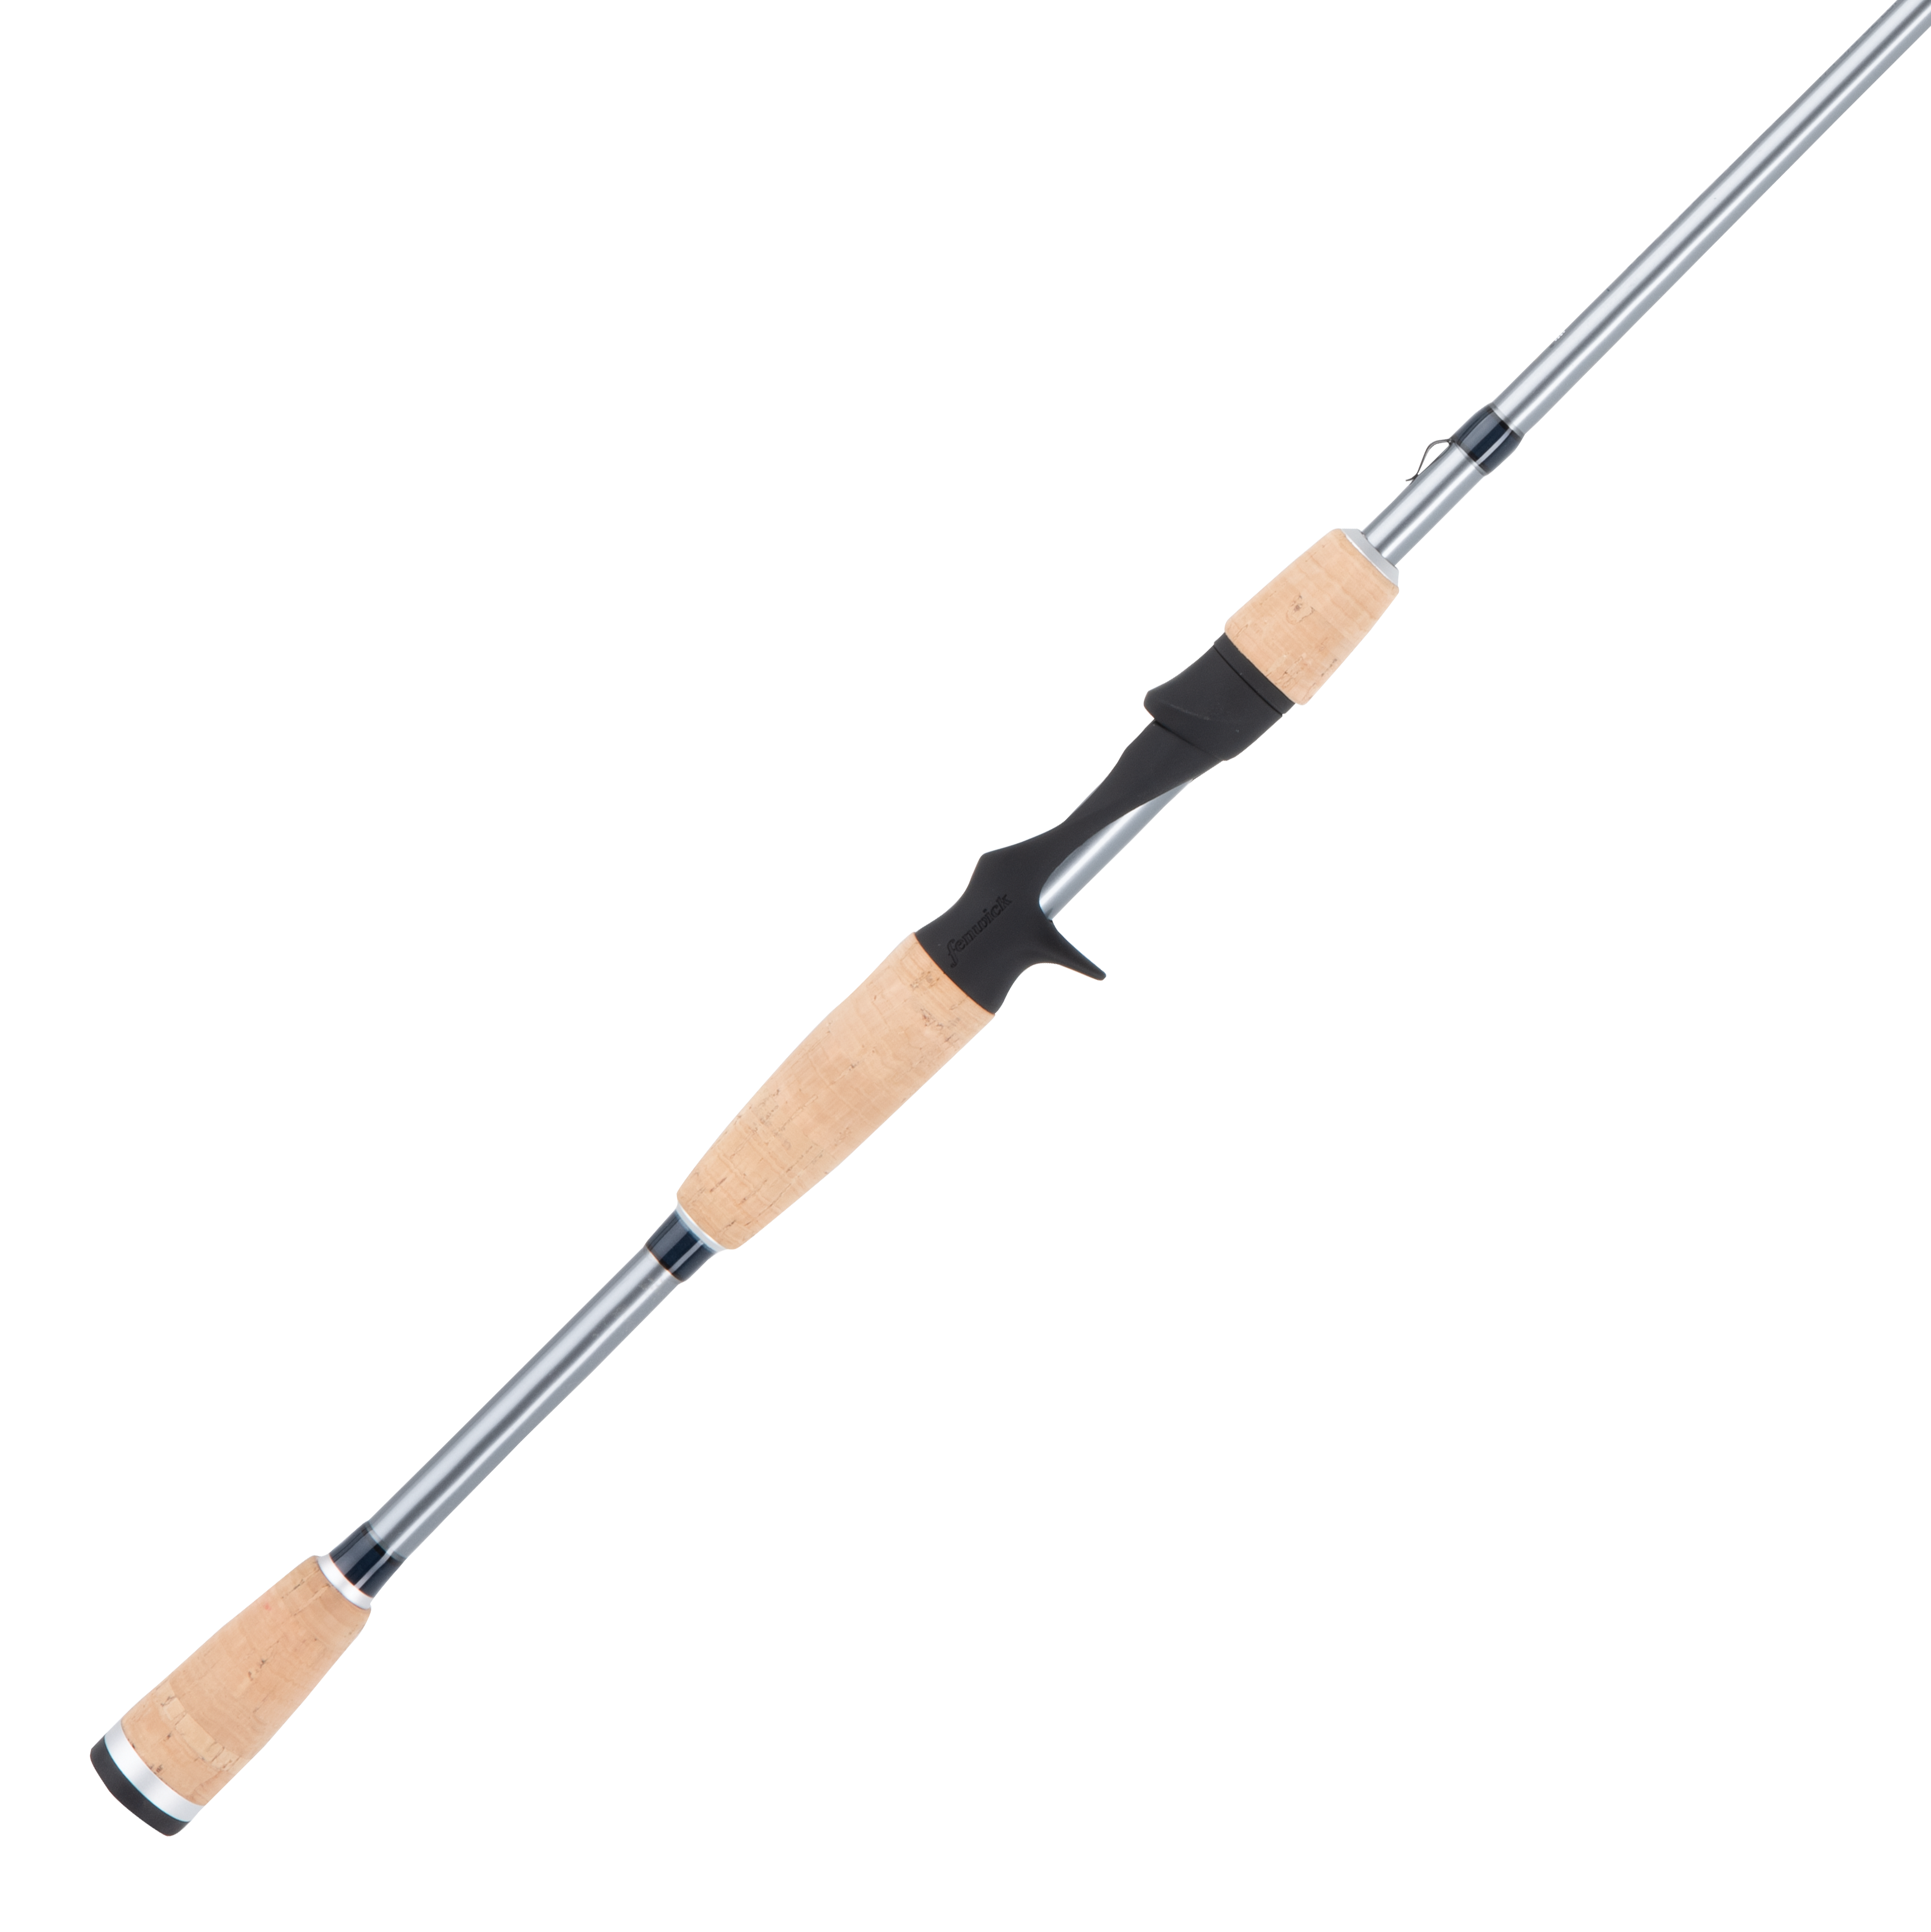 Fenwick HMG Inshore Spinning Rod, 1, Medium-Light, Fast, 8 Guides AAA Cork,  Split Grip